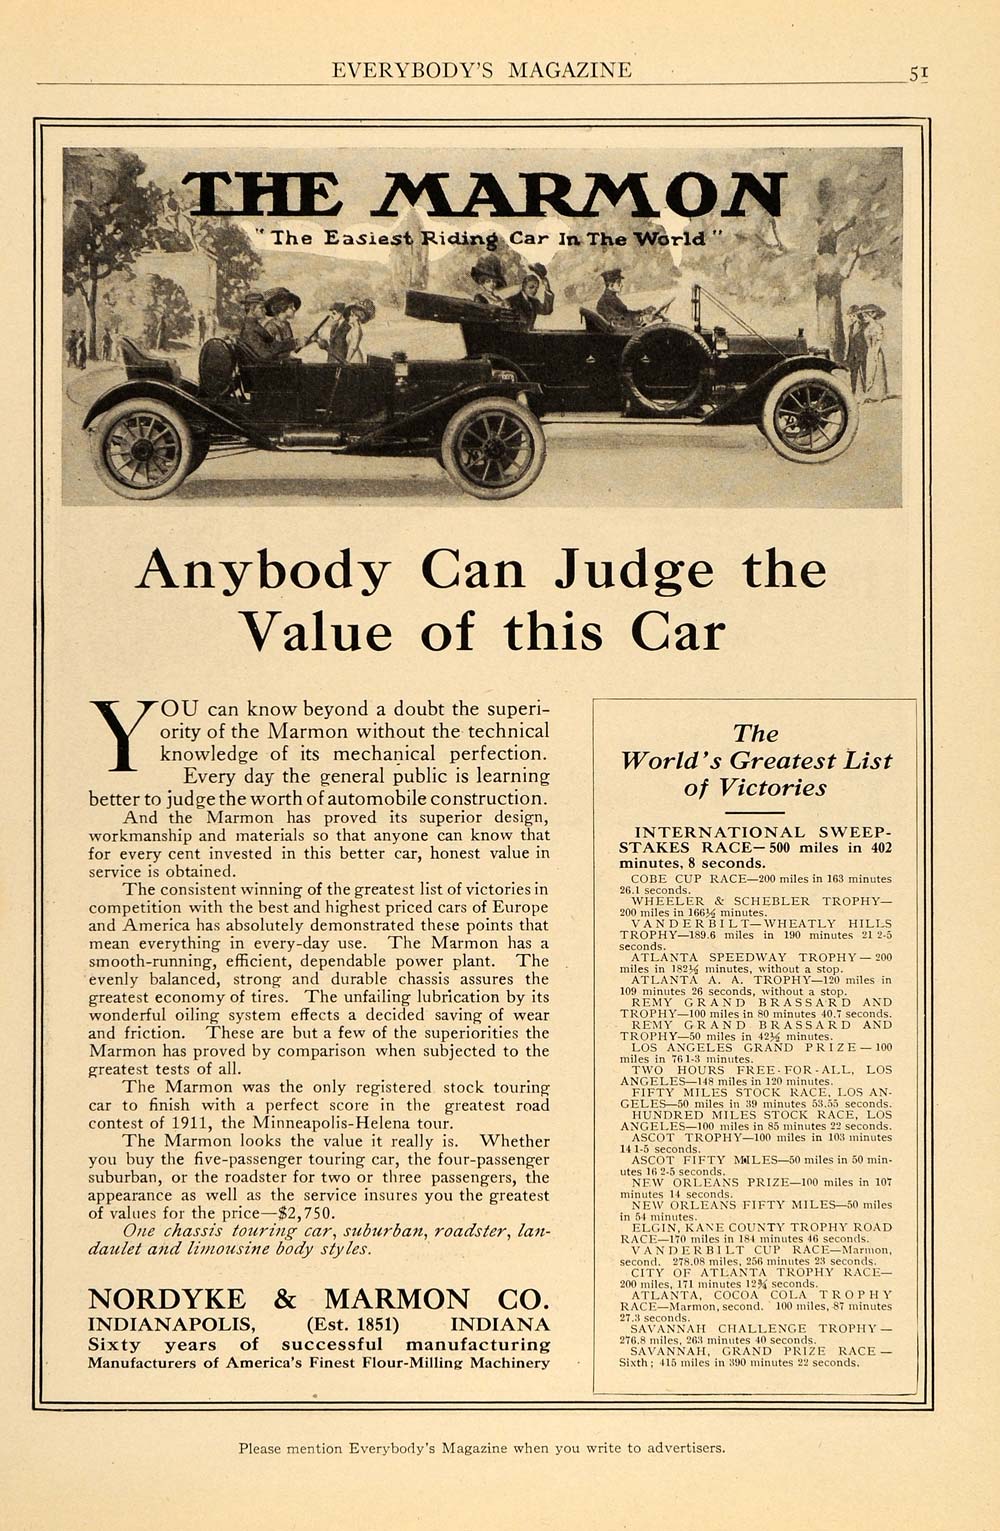 1911 Vintage Ad Nordyke Marmon Car Racing Victories - ORIGINAL ADVERTISING OLD3A